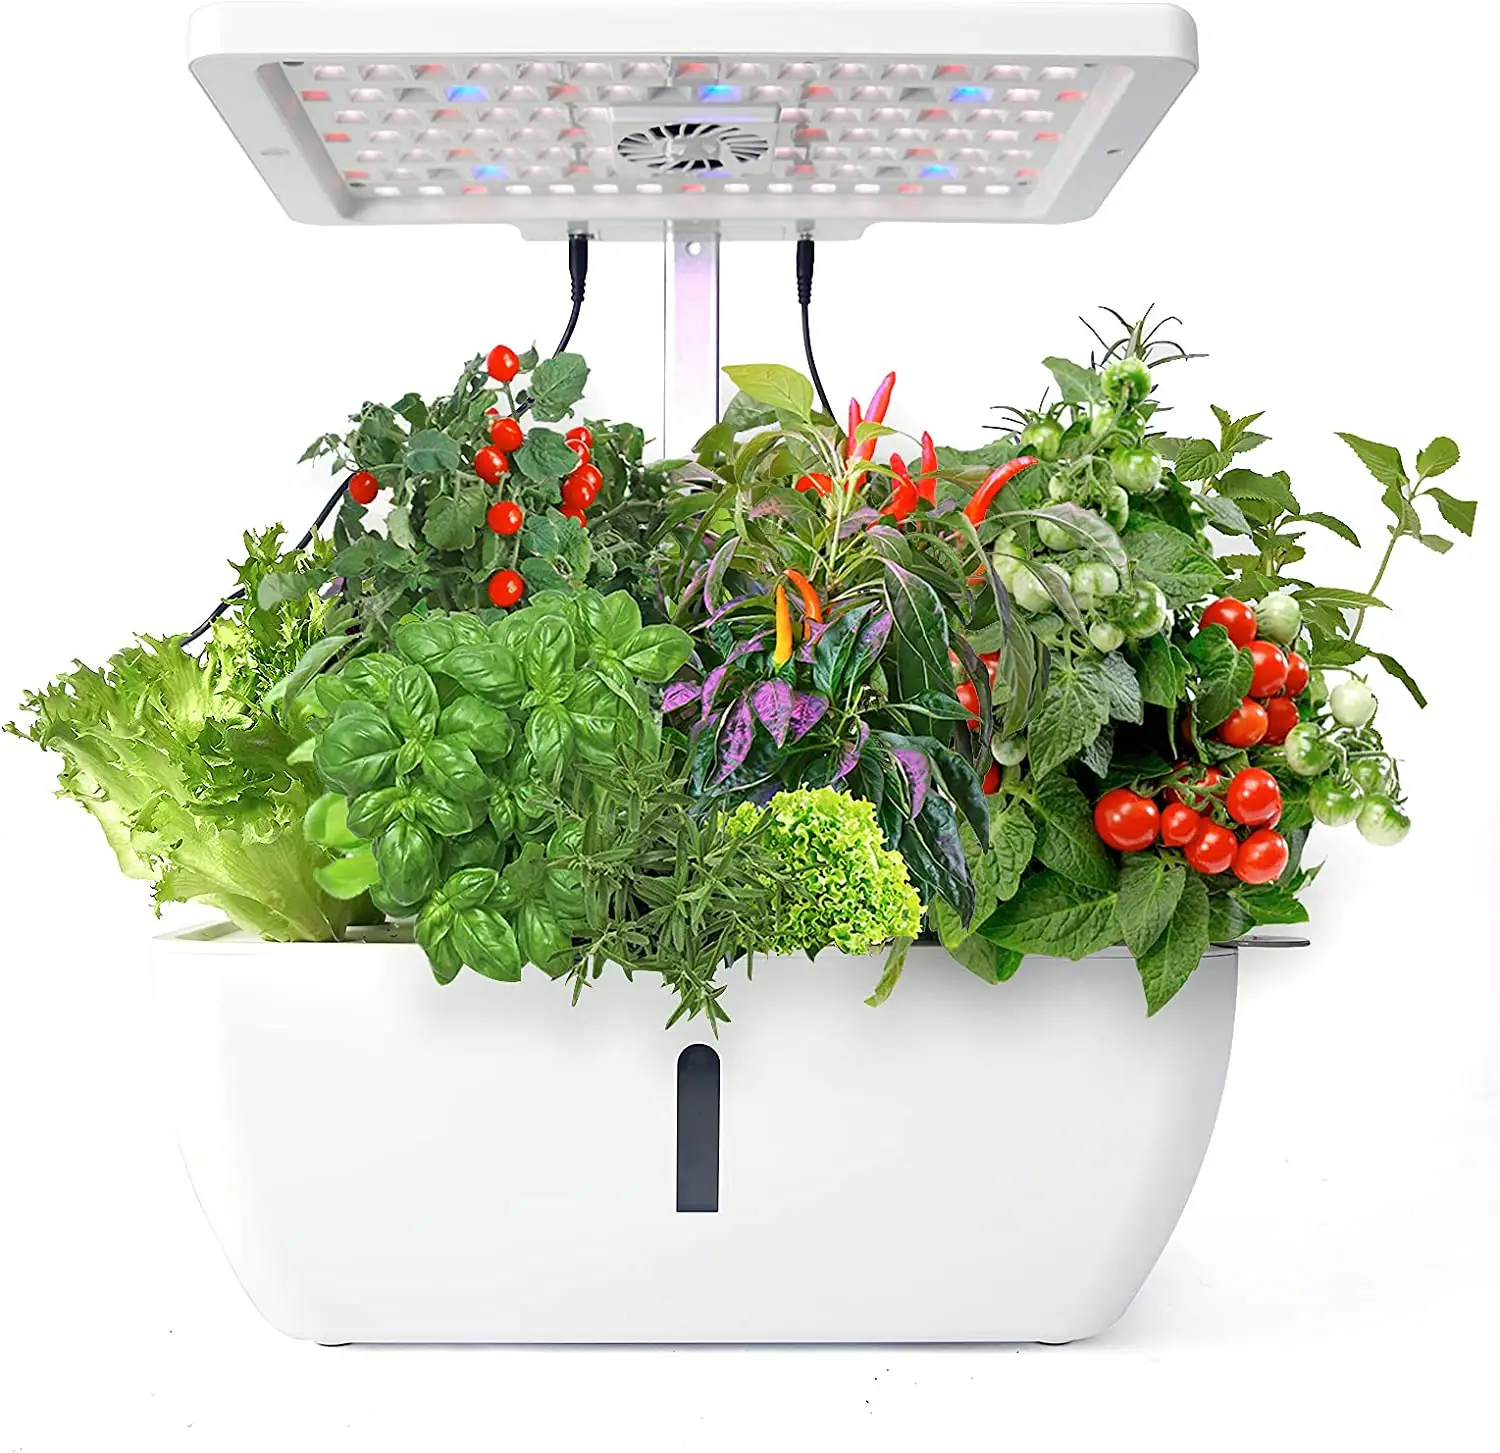 Vaso de flores para uso interno de casa, vaso de flores inteligente com luz led para crescimento de plantas, jardim, sistema de plantio hidropônico